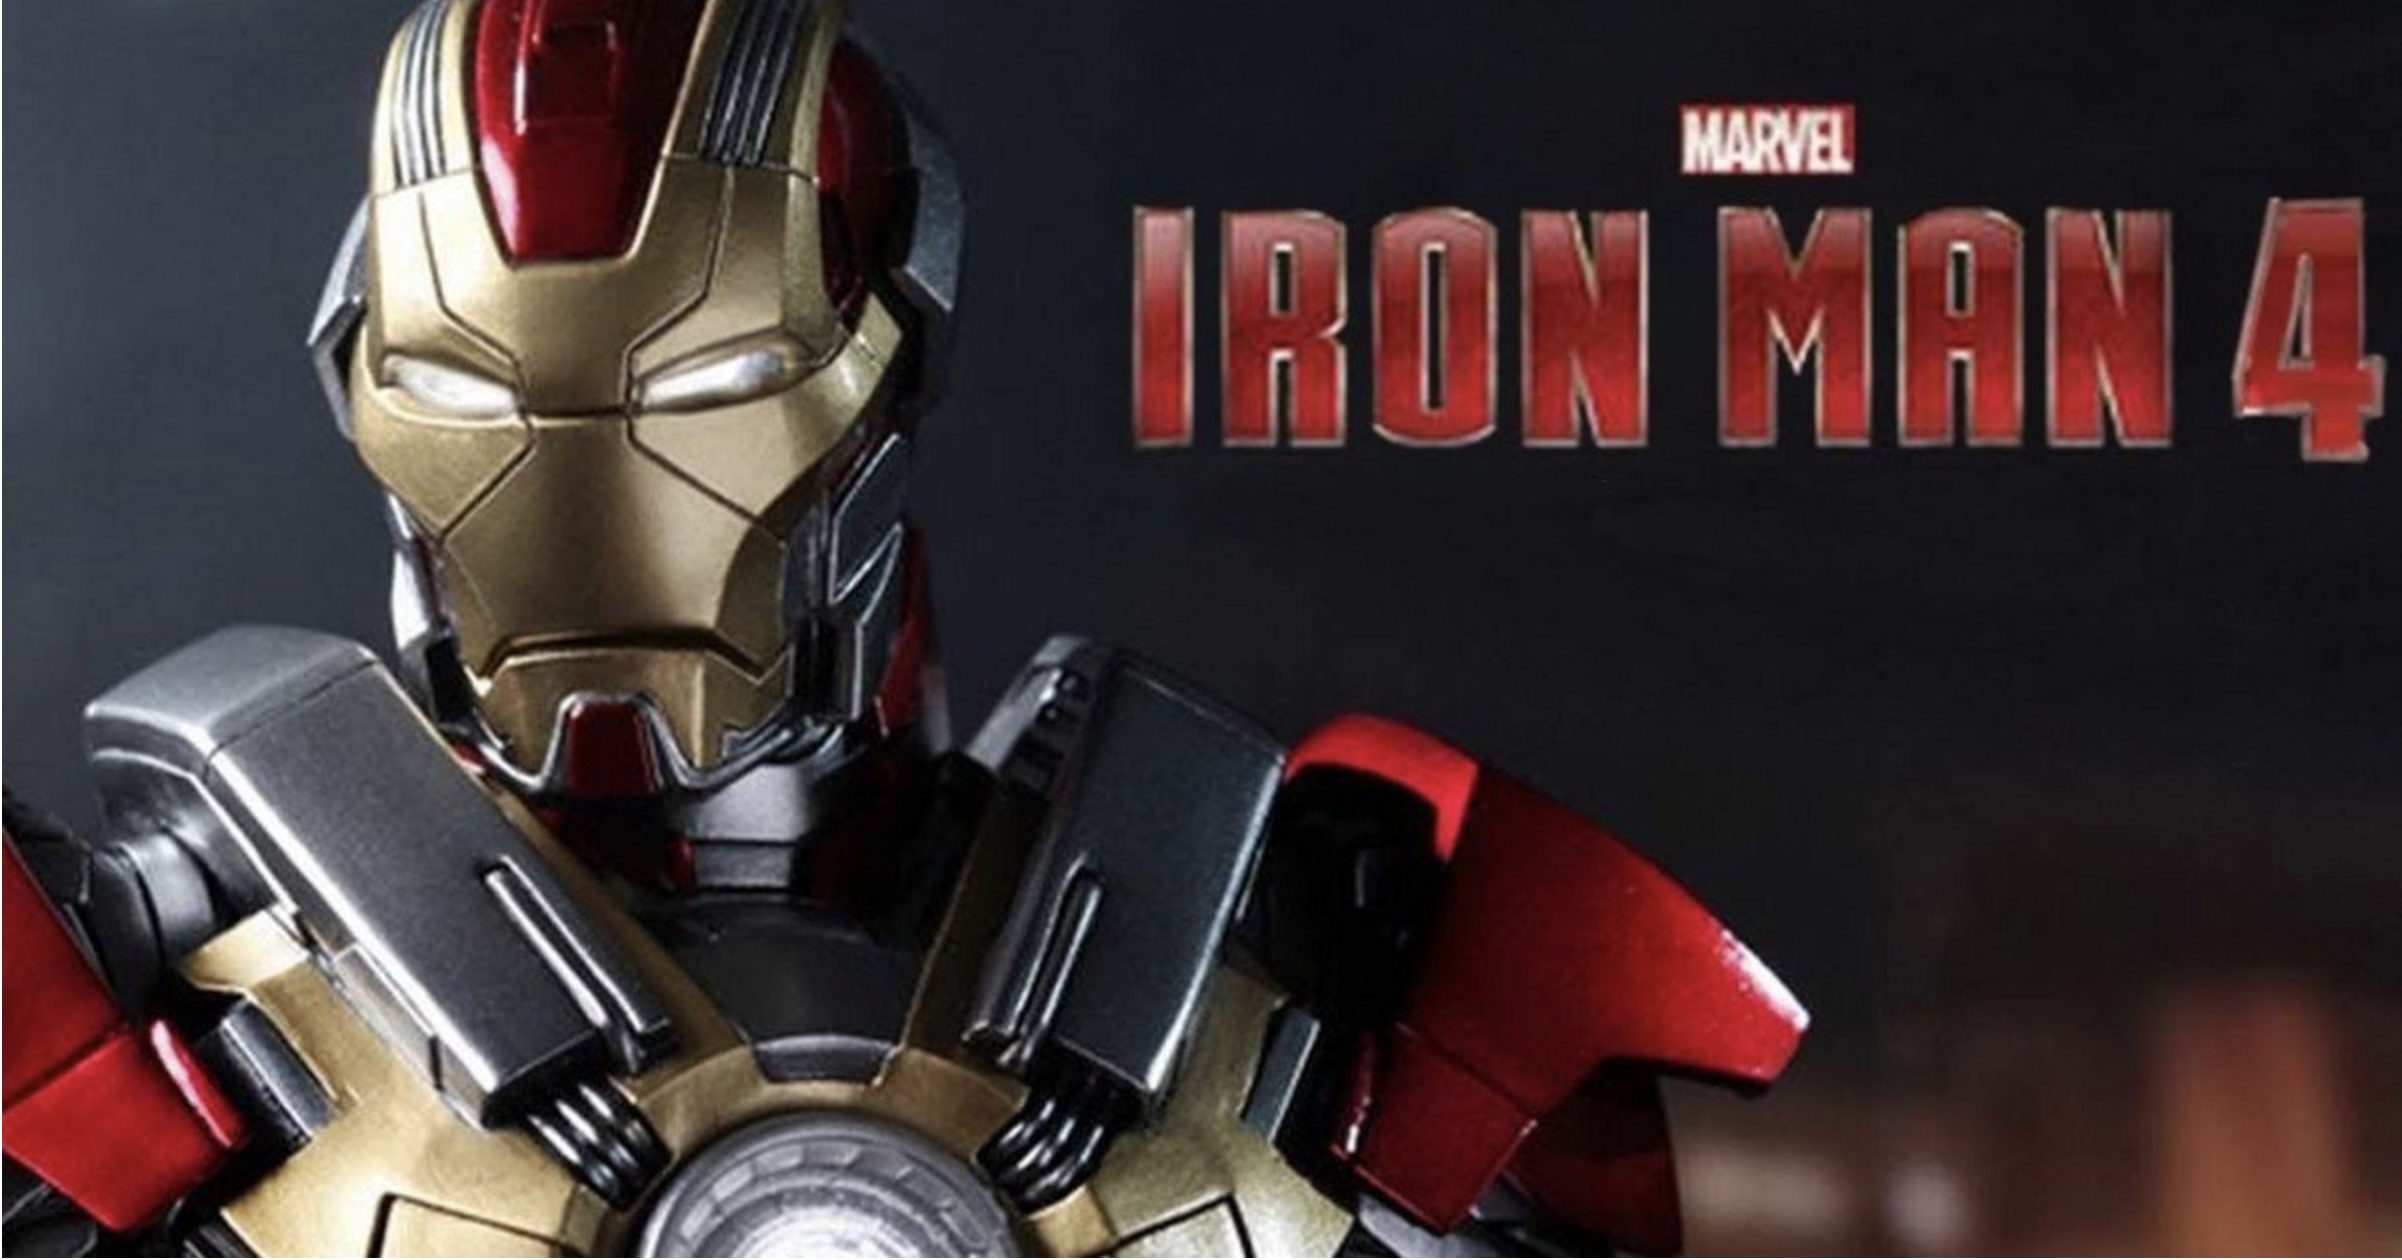 Iron Man 20 Release date, cast, plot, trailer   The Important Enews